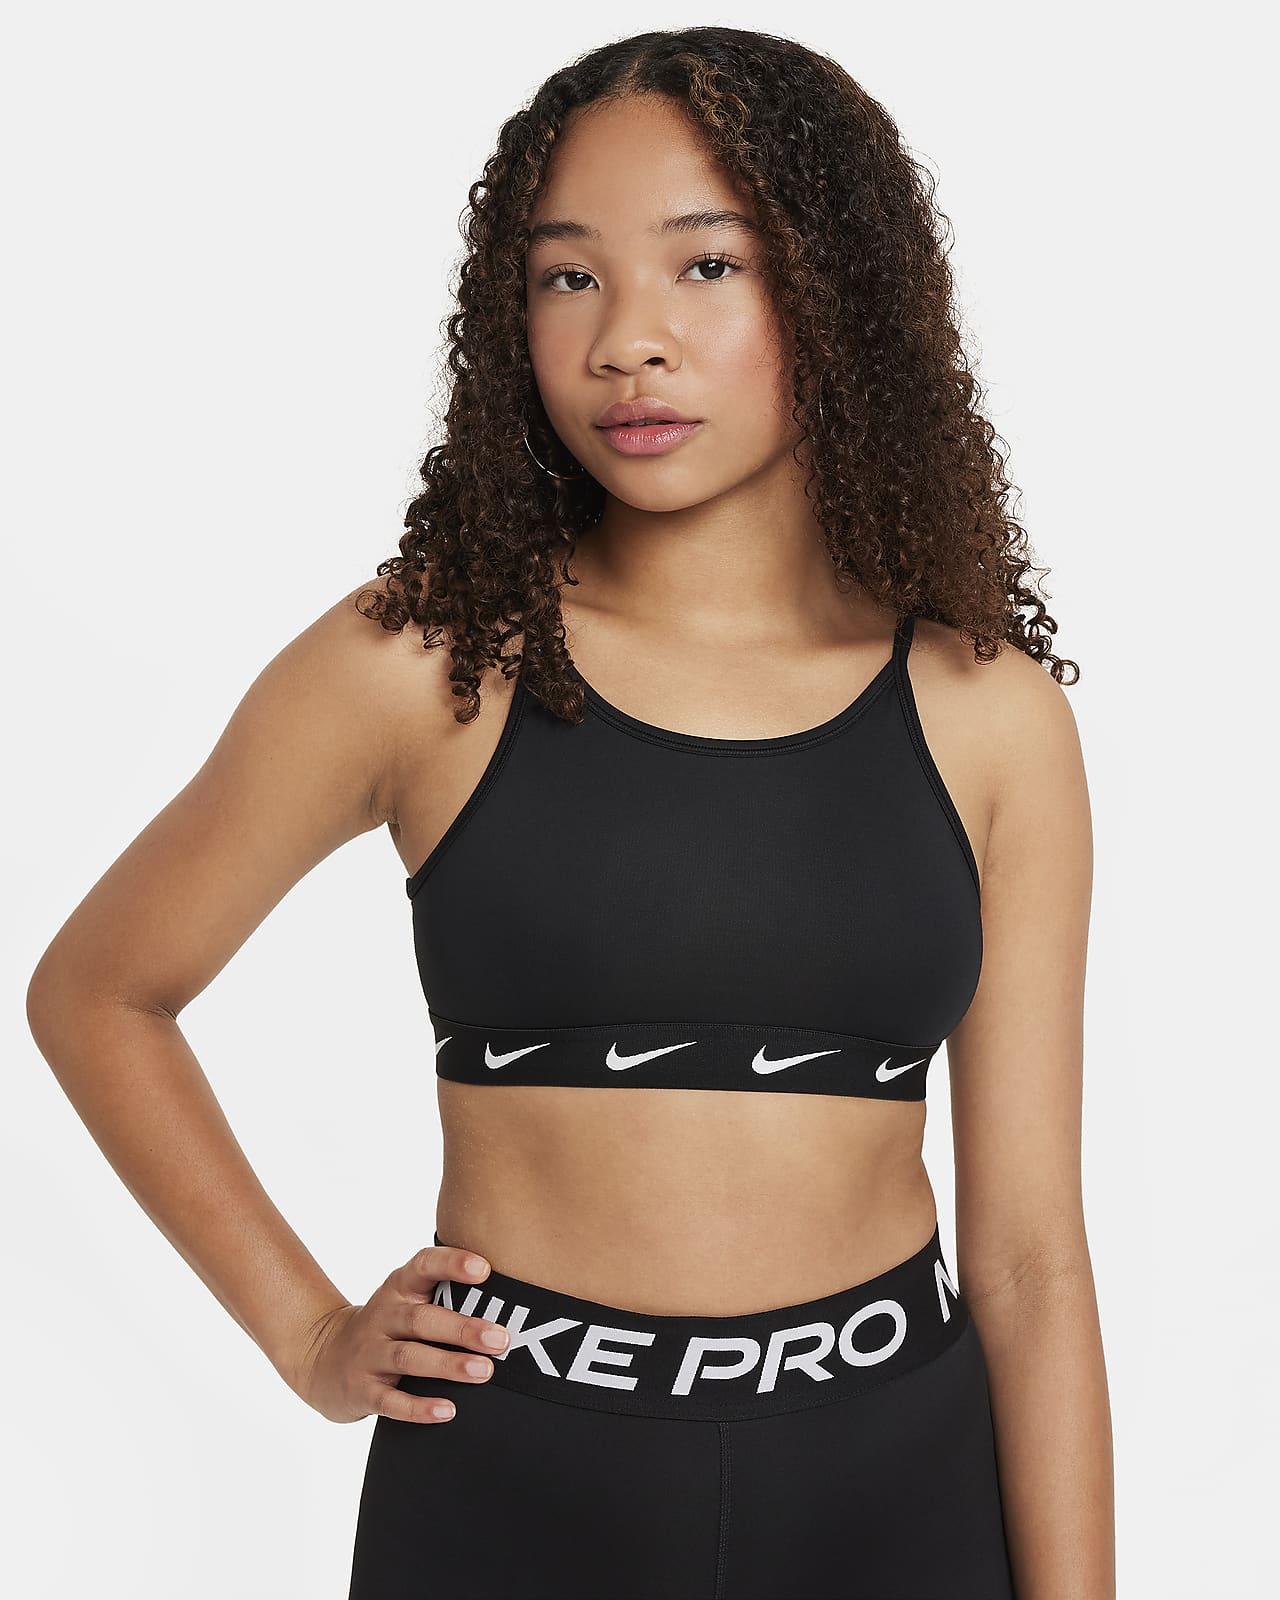 Womens Nike Pro. Nike JP